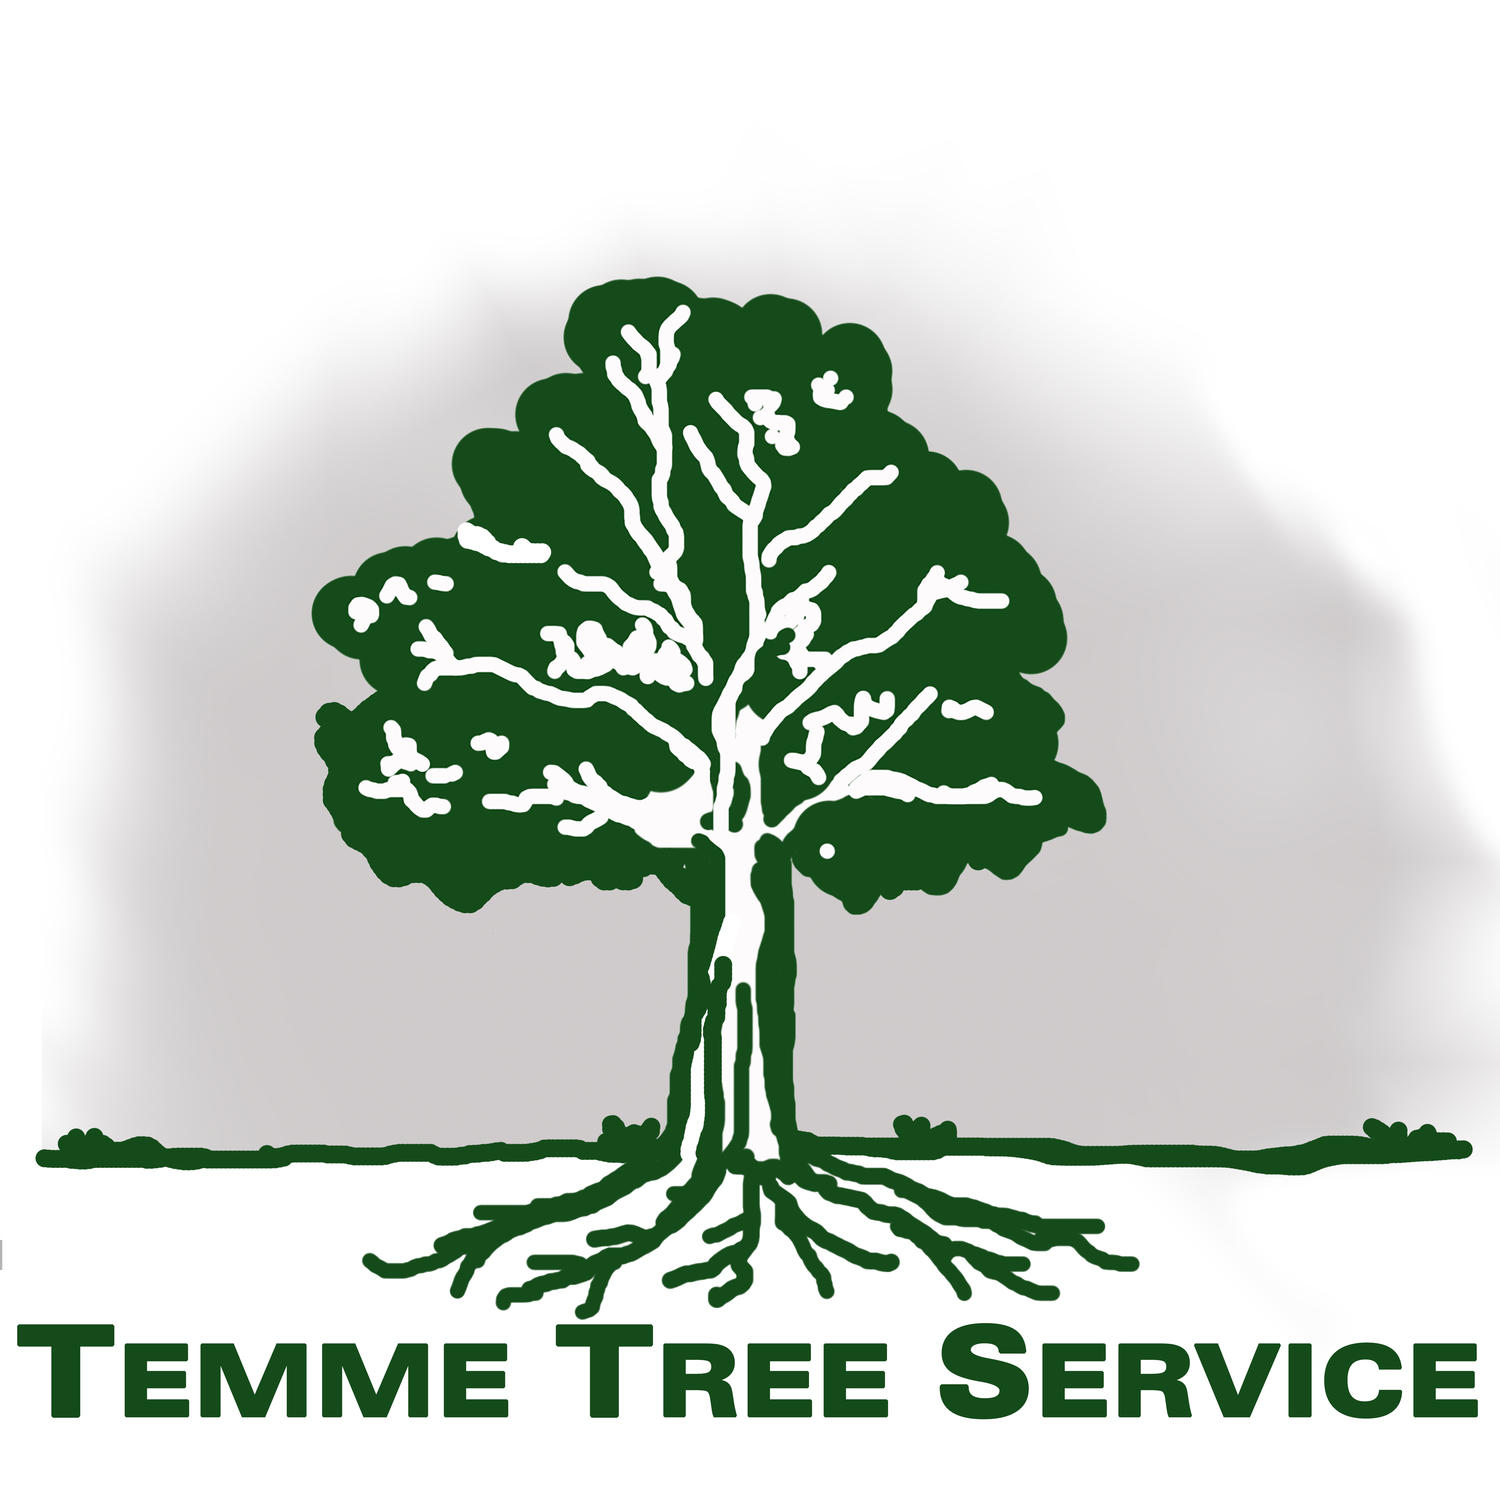 TEMME TREE SERVICE